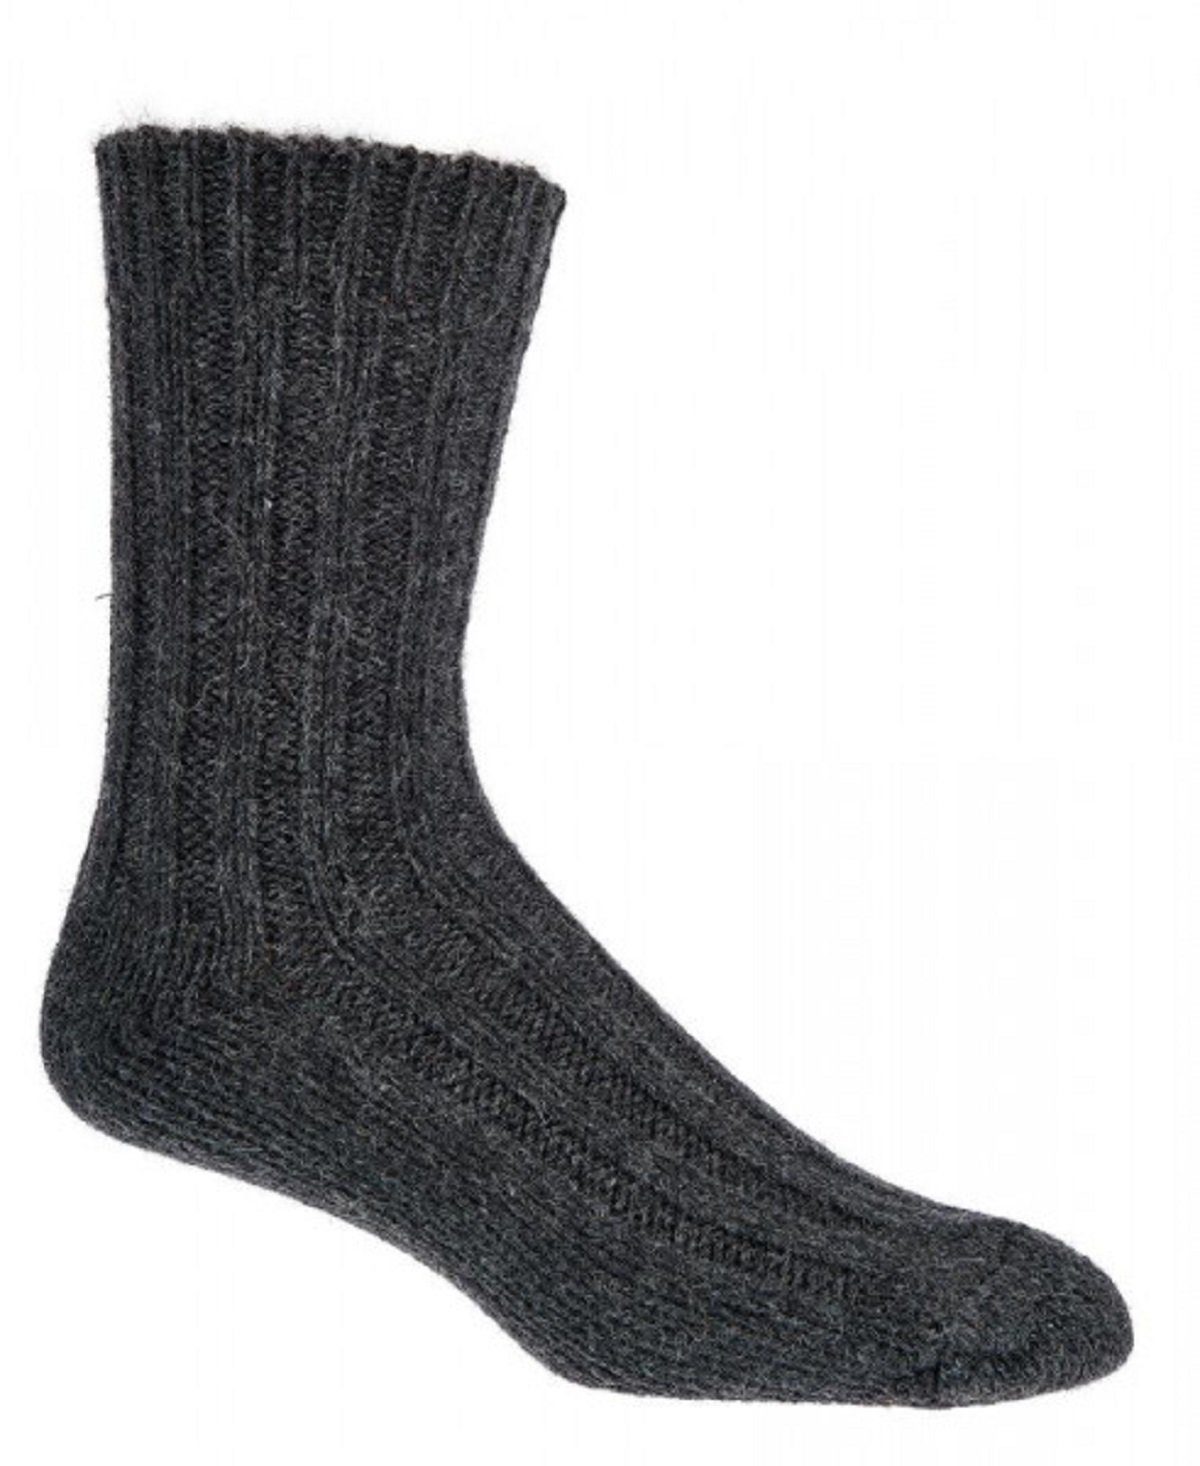 Socks 4 Fun Socken Socks 4 Fun 6519 100% Wollsocken mit Alpaka 2er Bündel (2er-Pack, 2-Paar, 2 Paar) antrazit